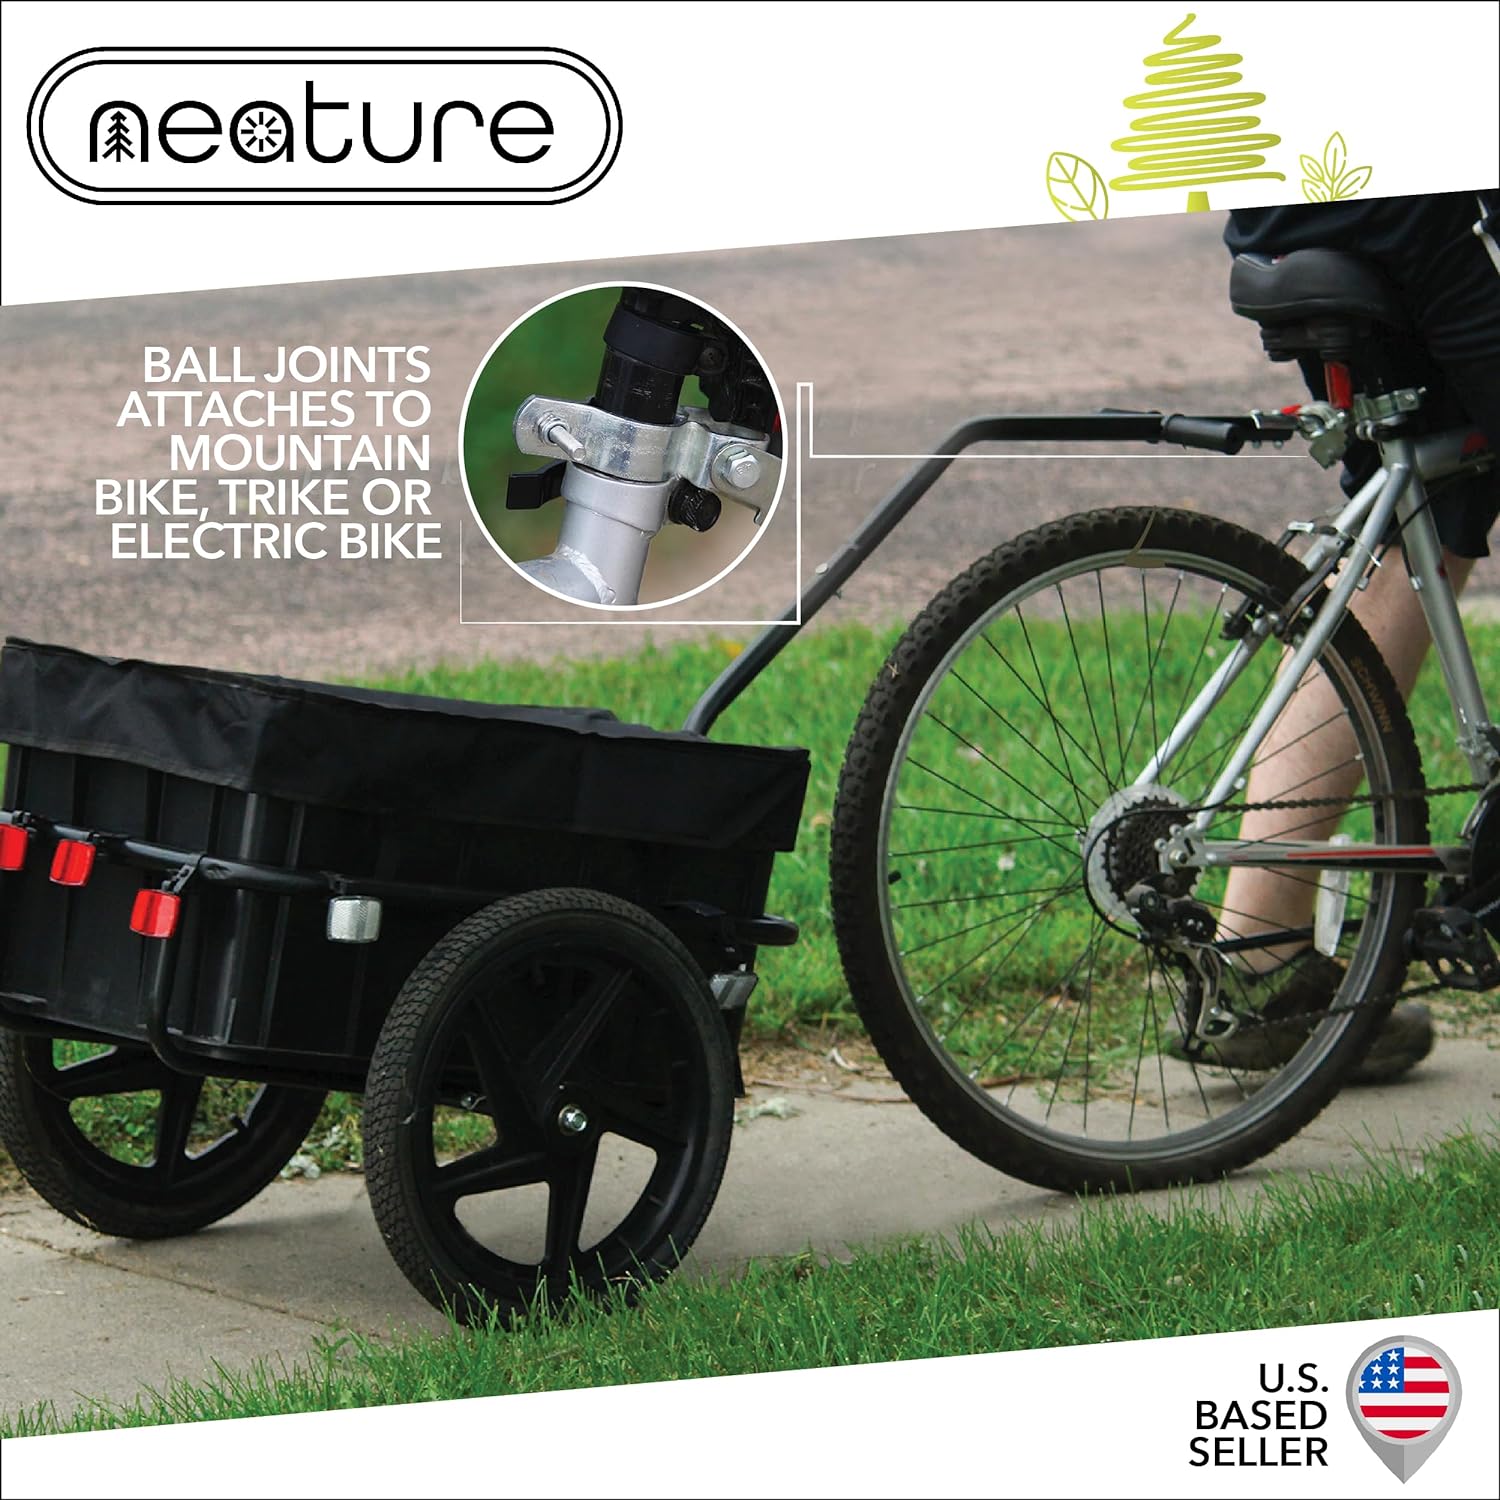 Neature Bike Trailer Utility Cart and Bike Trailer Attachment Kit - 88lb Capacity Towable Bike Cargo Wagon for Travel